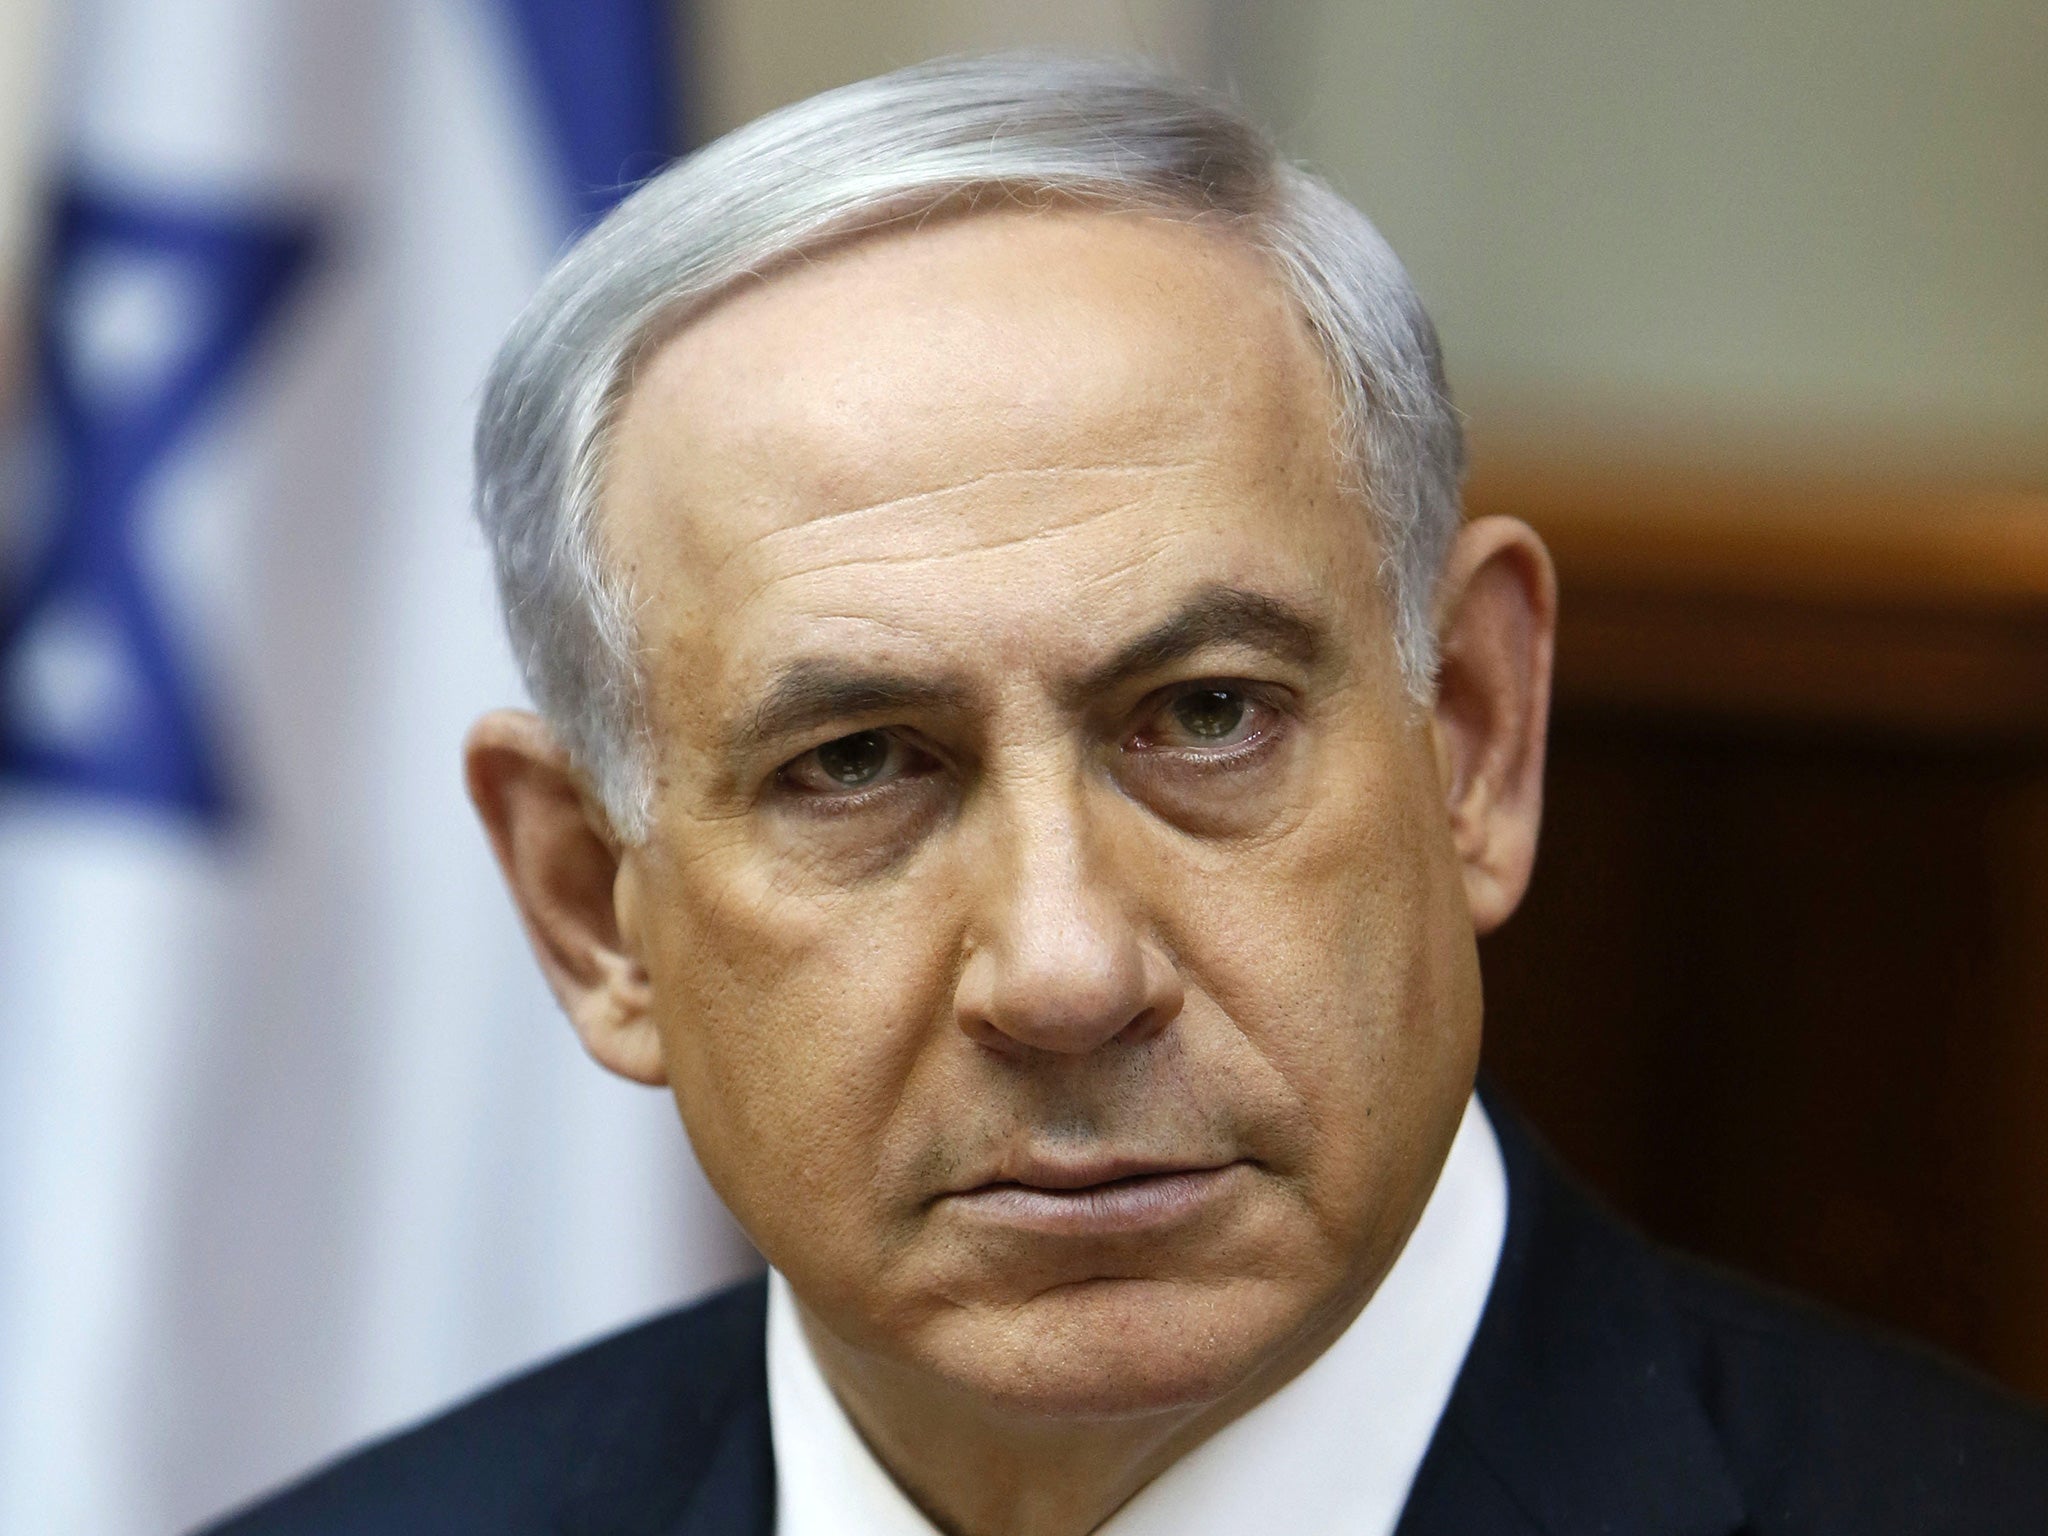 Netanyahu makes an unlikely Saudi ally (AFP/Getty)